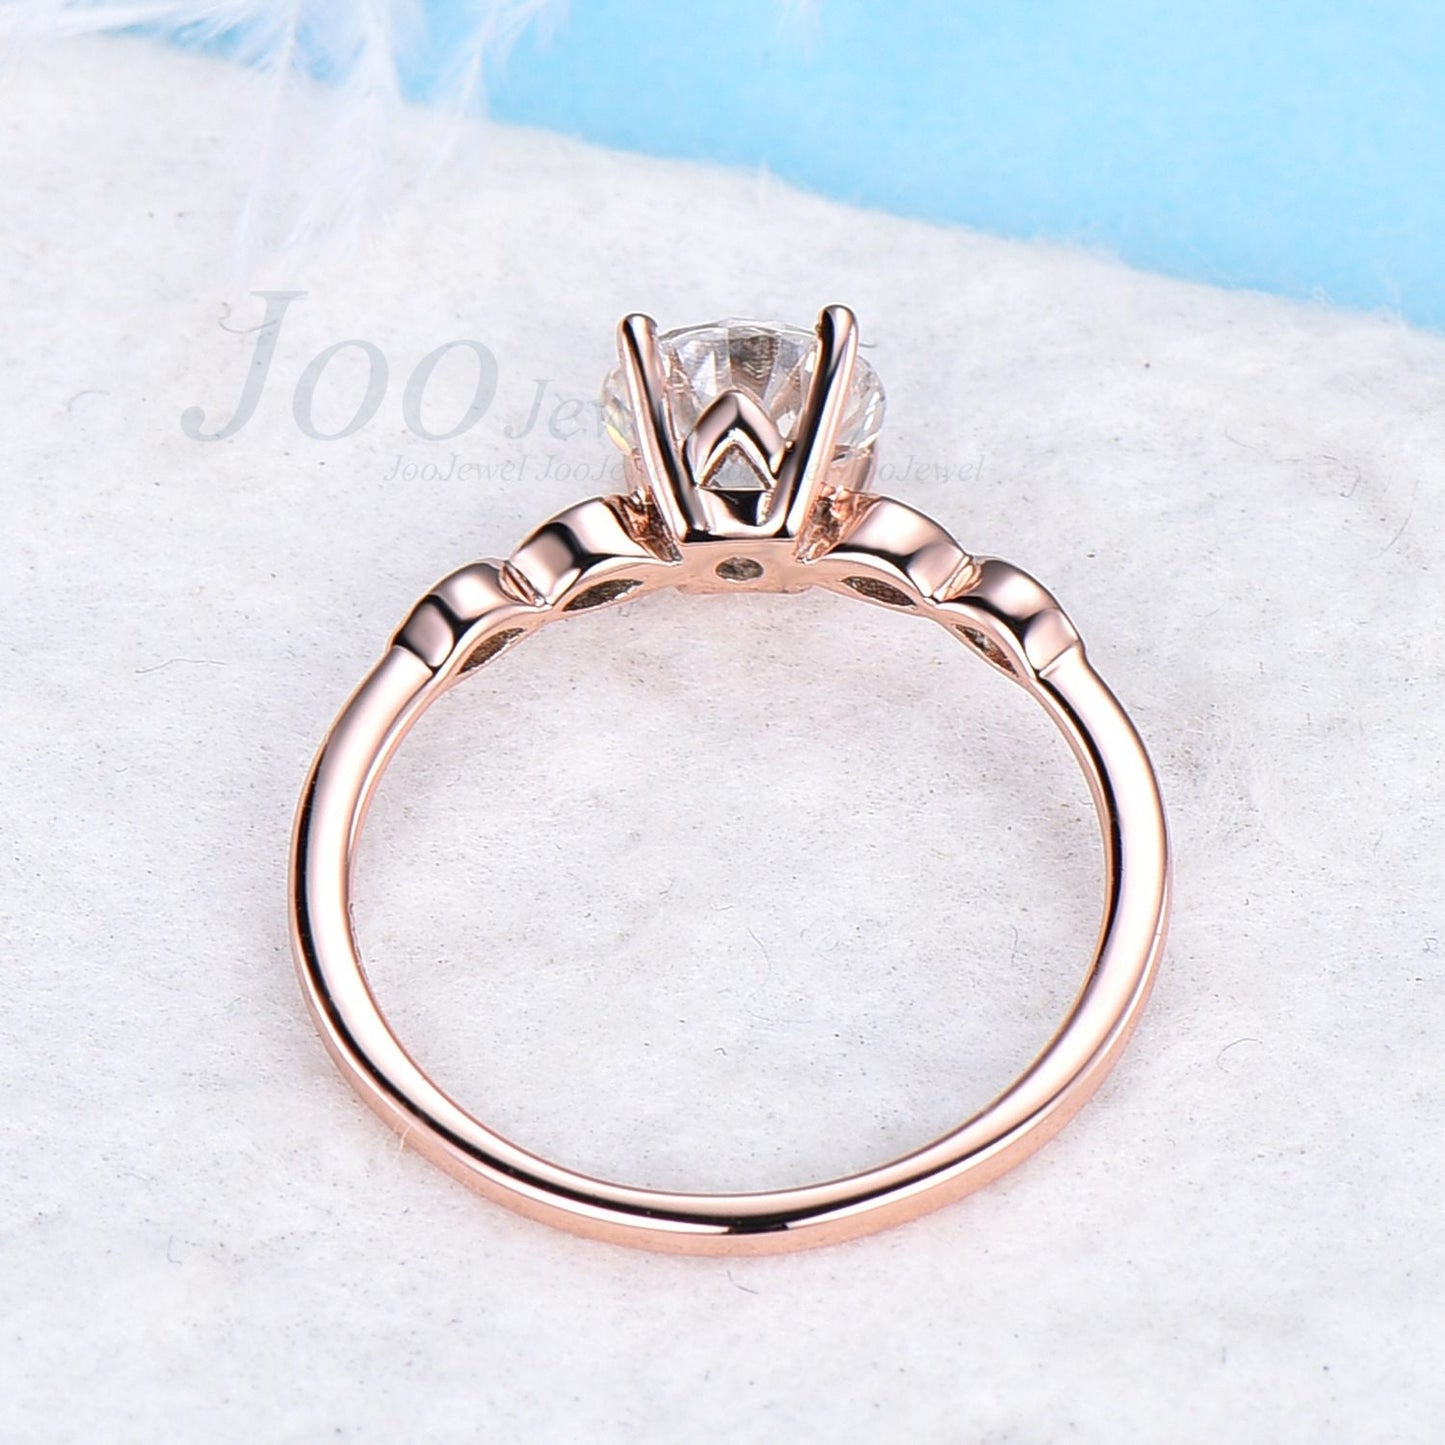 1ct Round Cut Moissanite Engagement Rings Milgrain Ring 6.5mm Prong Setting Diamond Wedding Promise Ring for Women Sterling Silver Ring